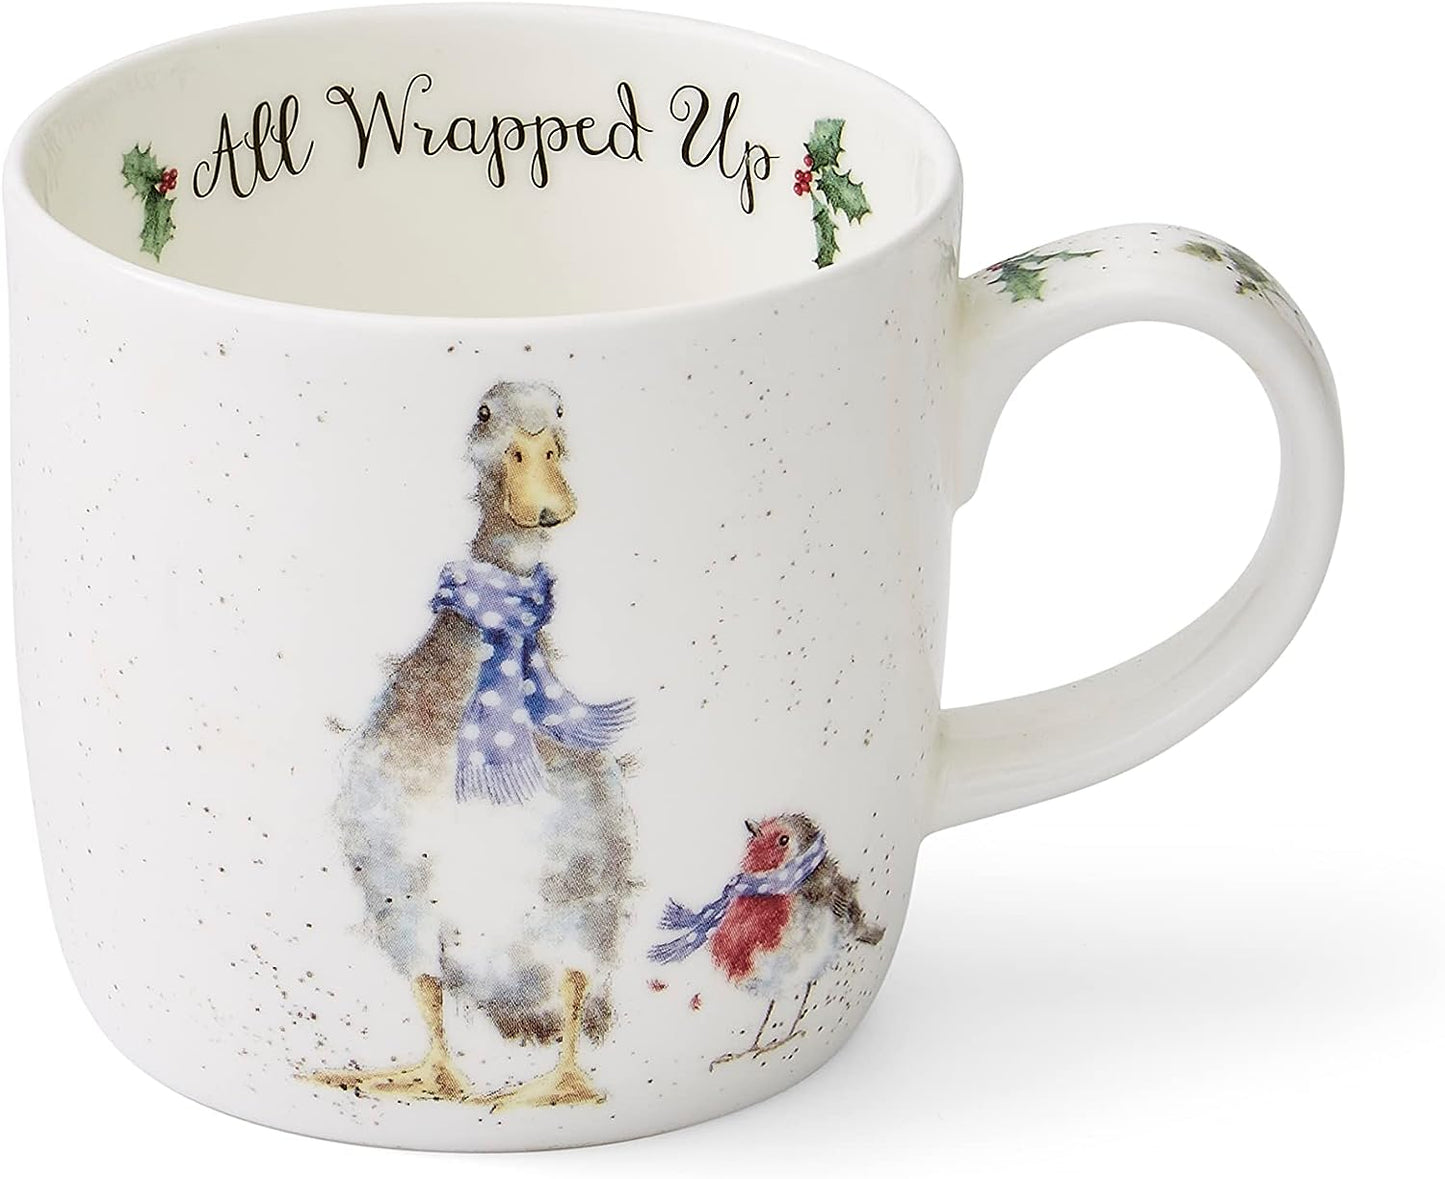 Set of 4 Wrendale Christmas mugs